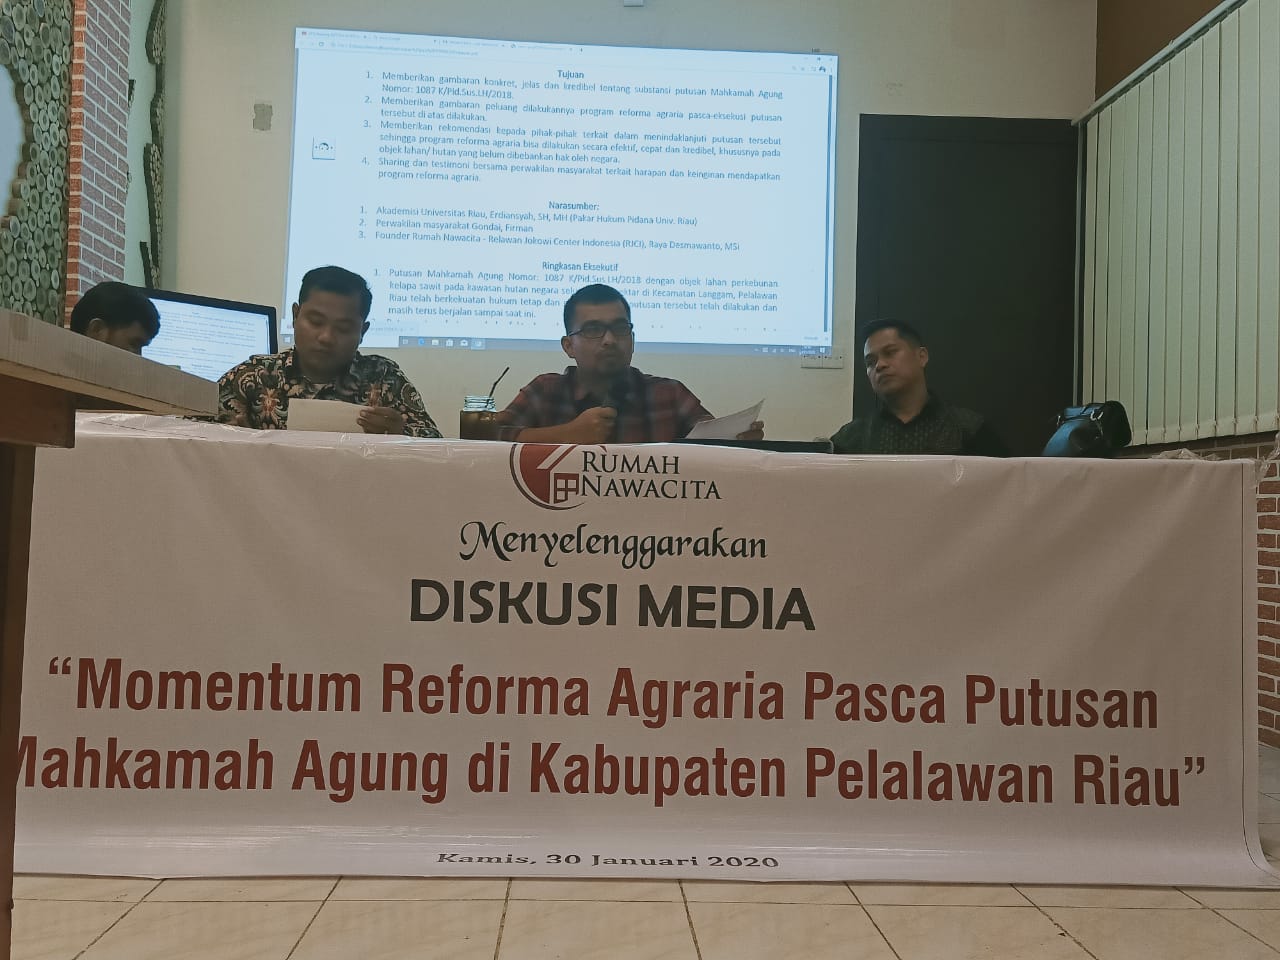 Rumah Nawacita Gelar Diskusi Bersama Media Cari Solusi Kasus Lahan di Pelalawan